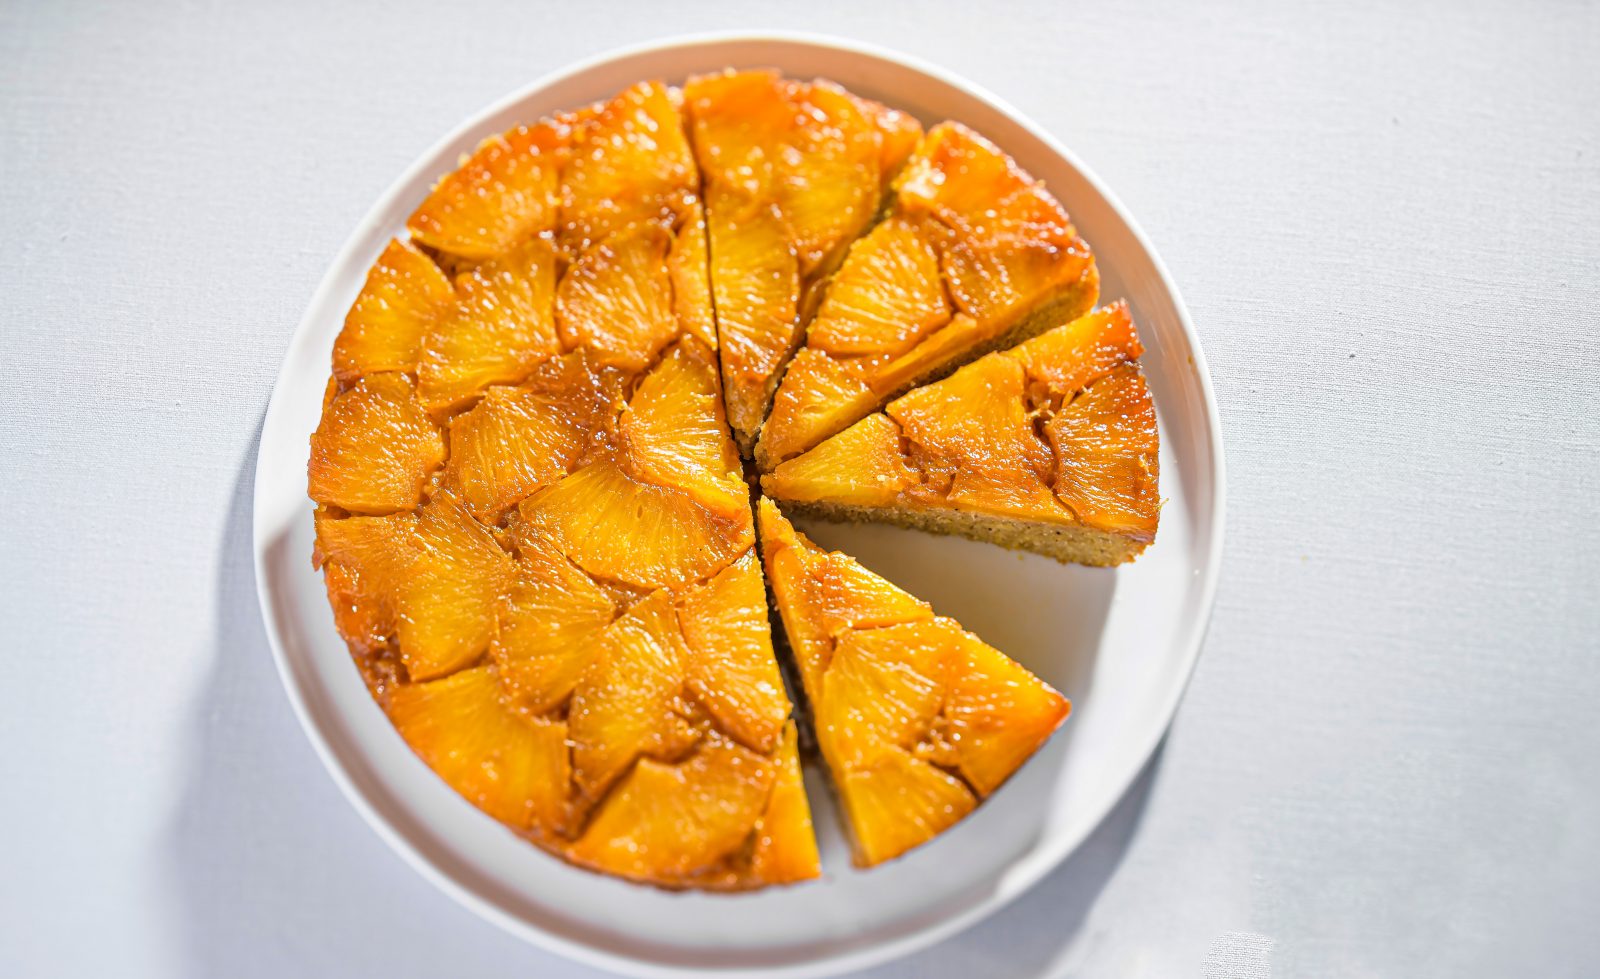 https://www.177milkstreet.com/assets/site/Recipes/_large/Pineapple-Upside-Down-Cornmeal-Cake.jpg